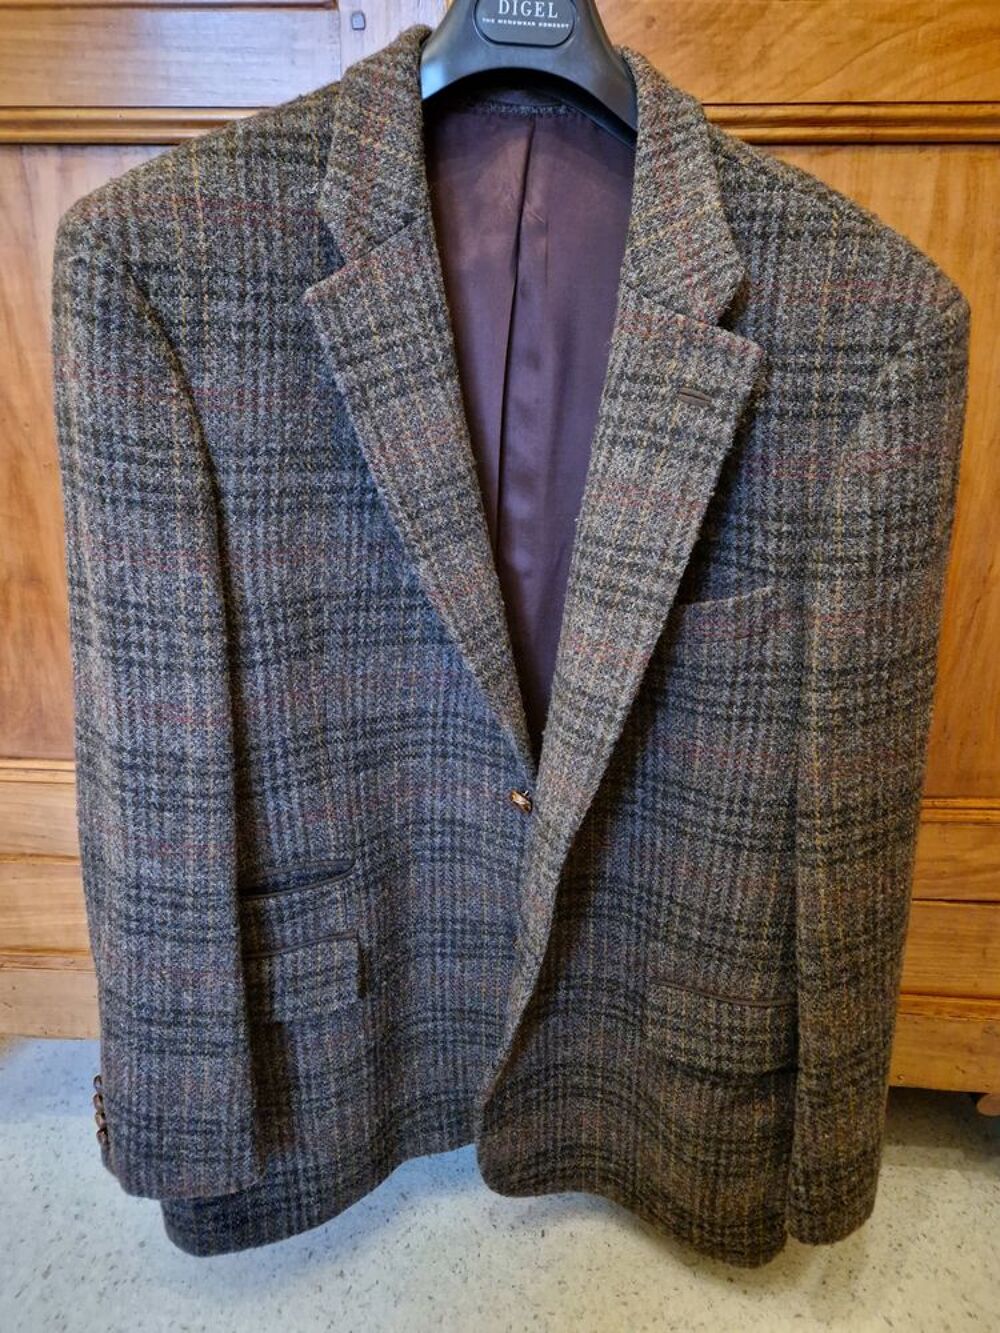 veste homme - marron avec rayures - HARRIS TWEED - taille 64 Vtements